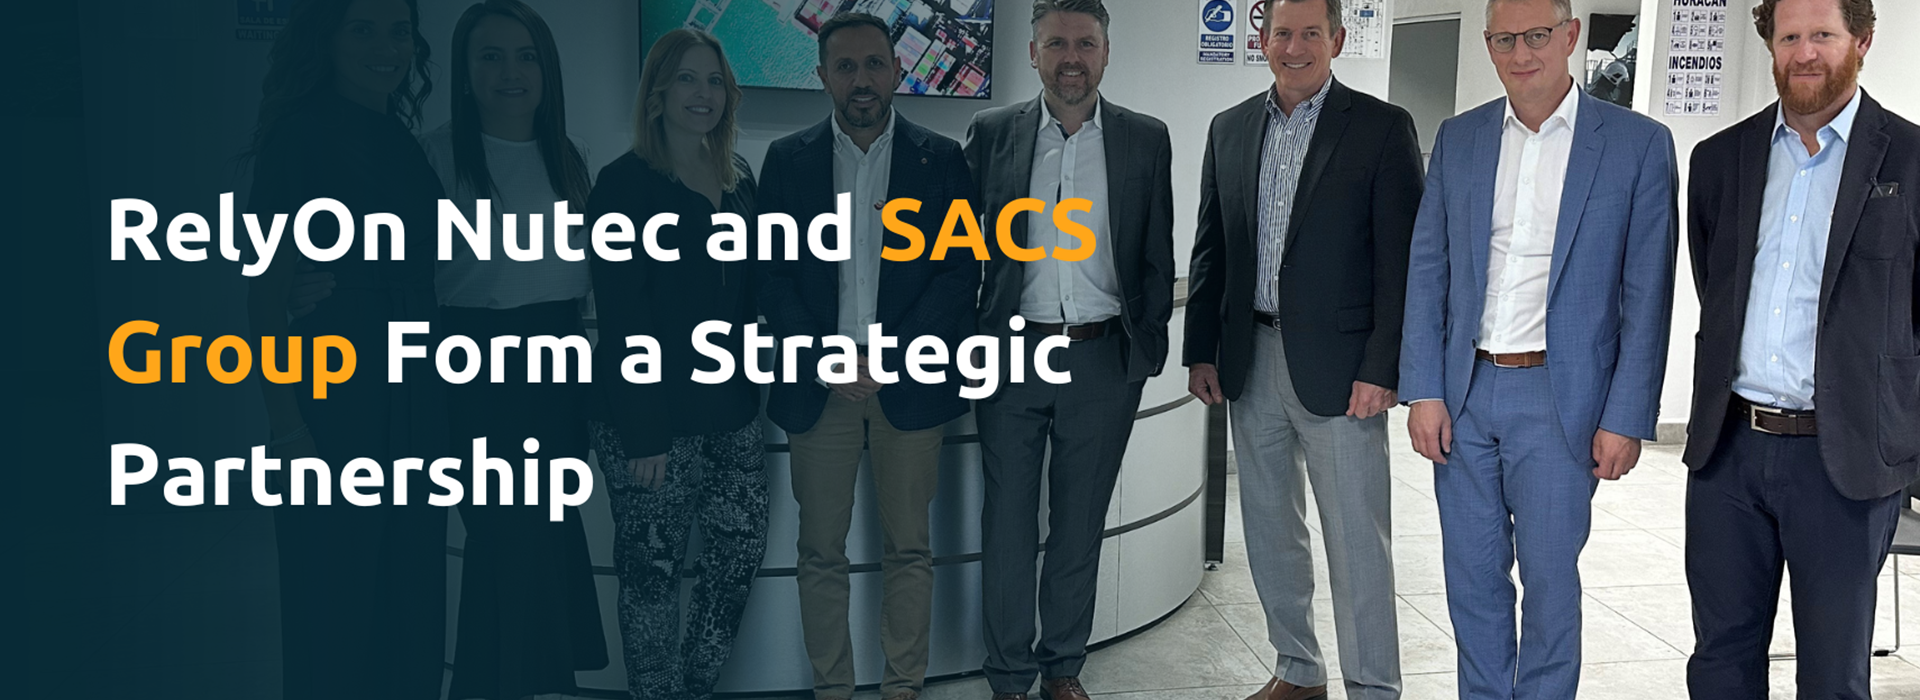 Press Release SACS + Relyon Nutec Partnership